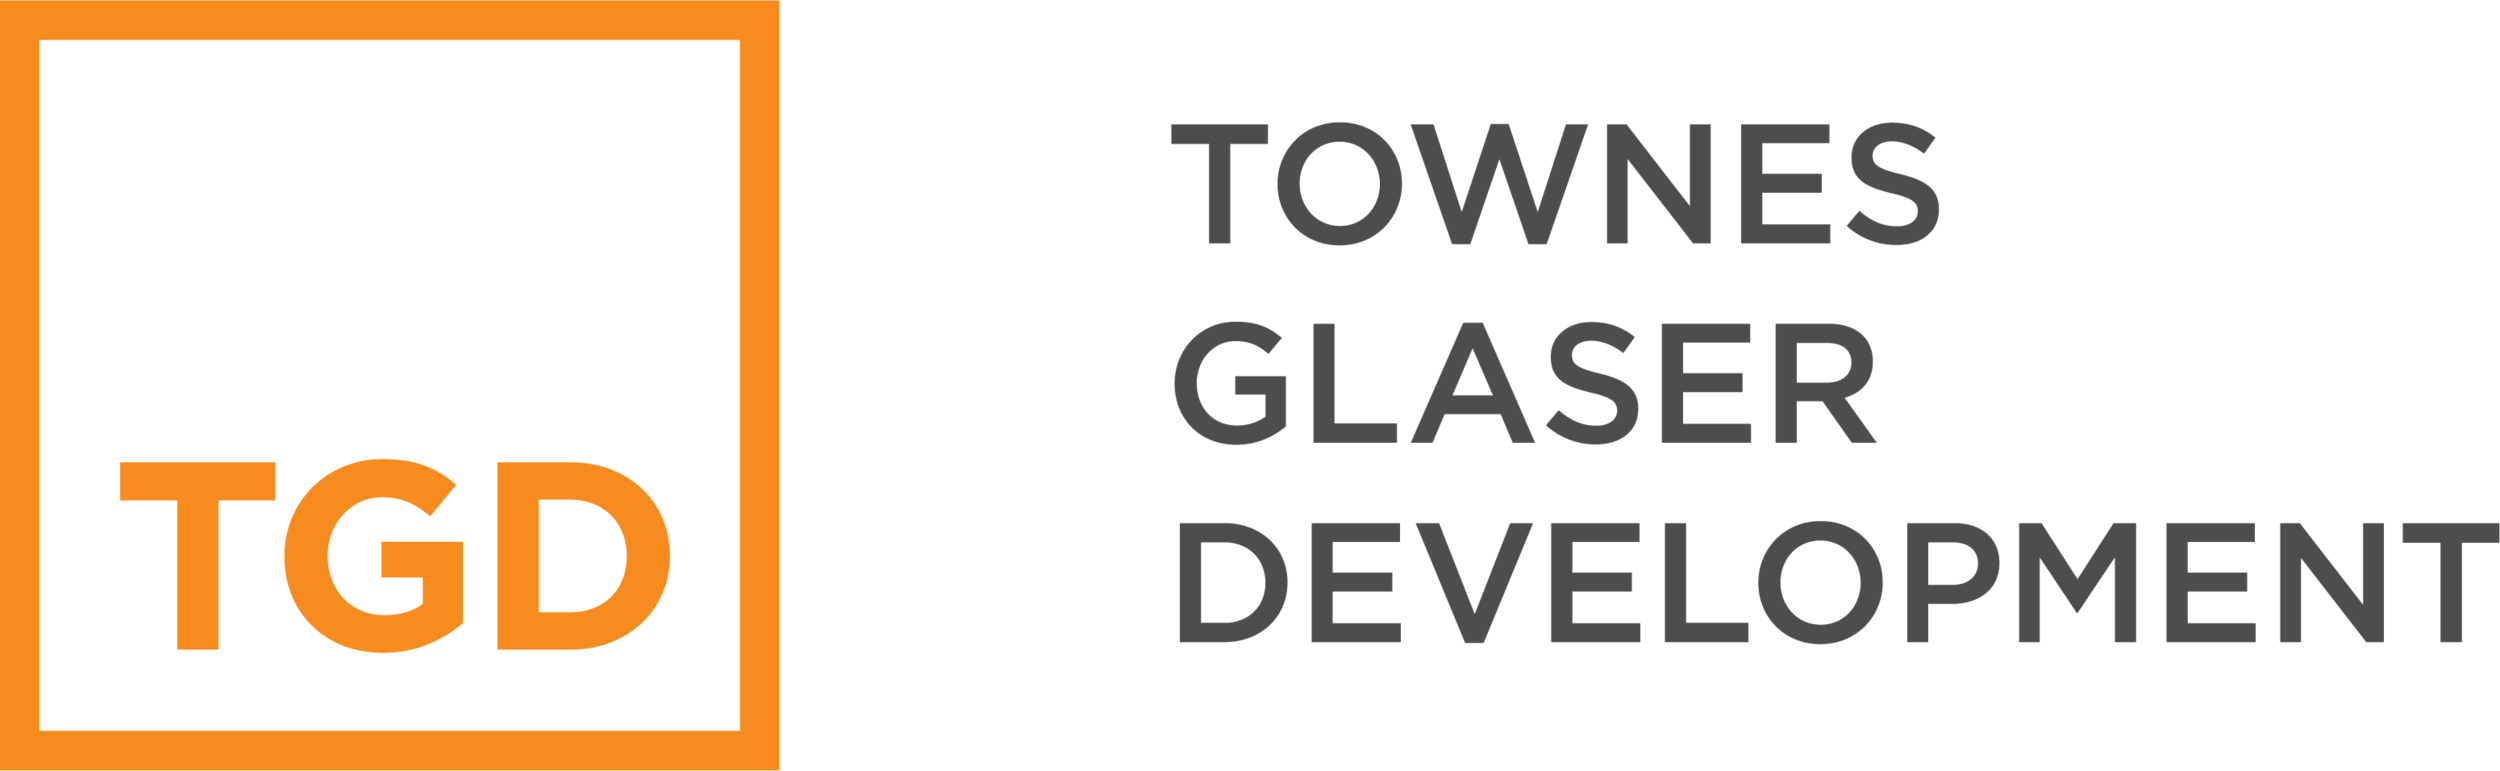 Townes Glaser Development